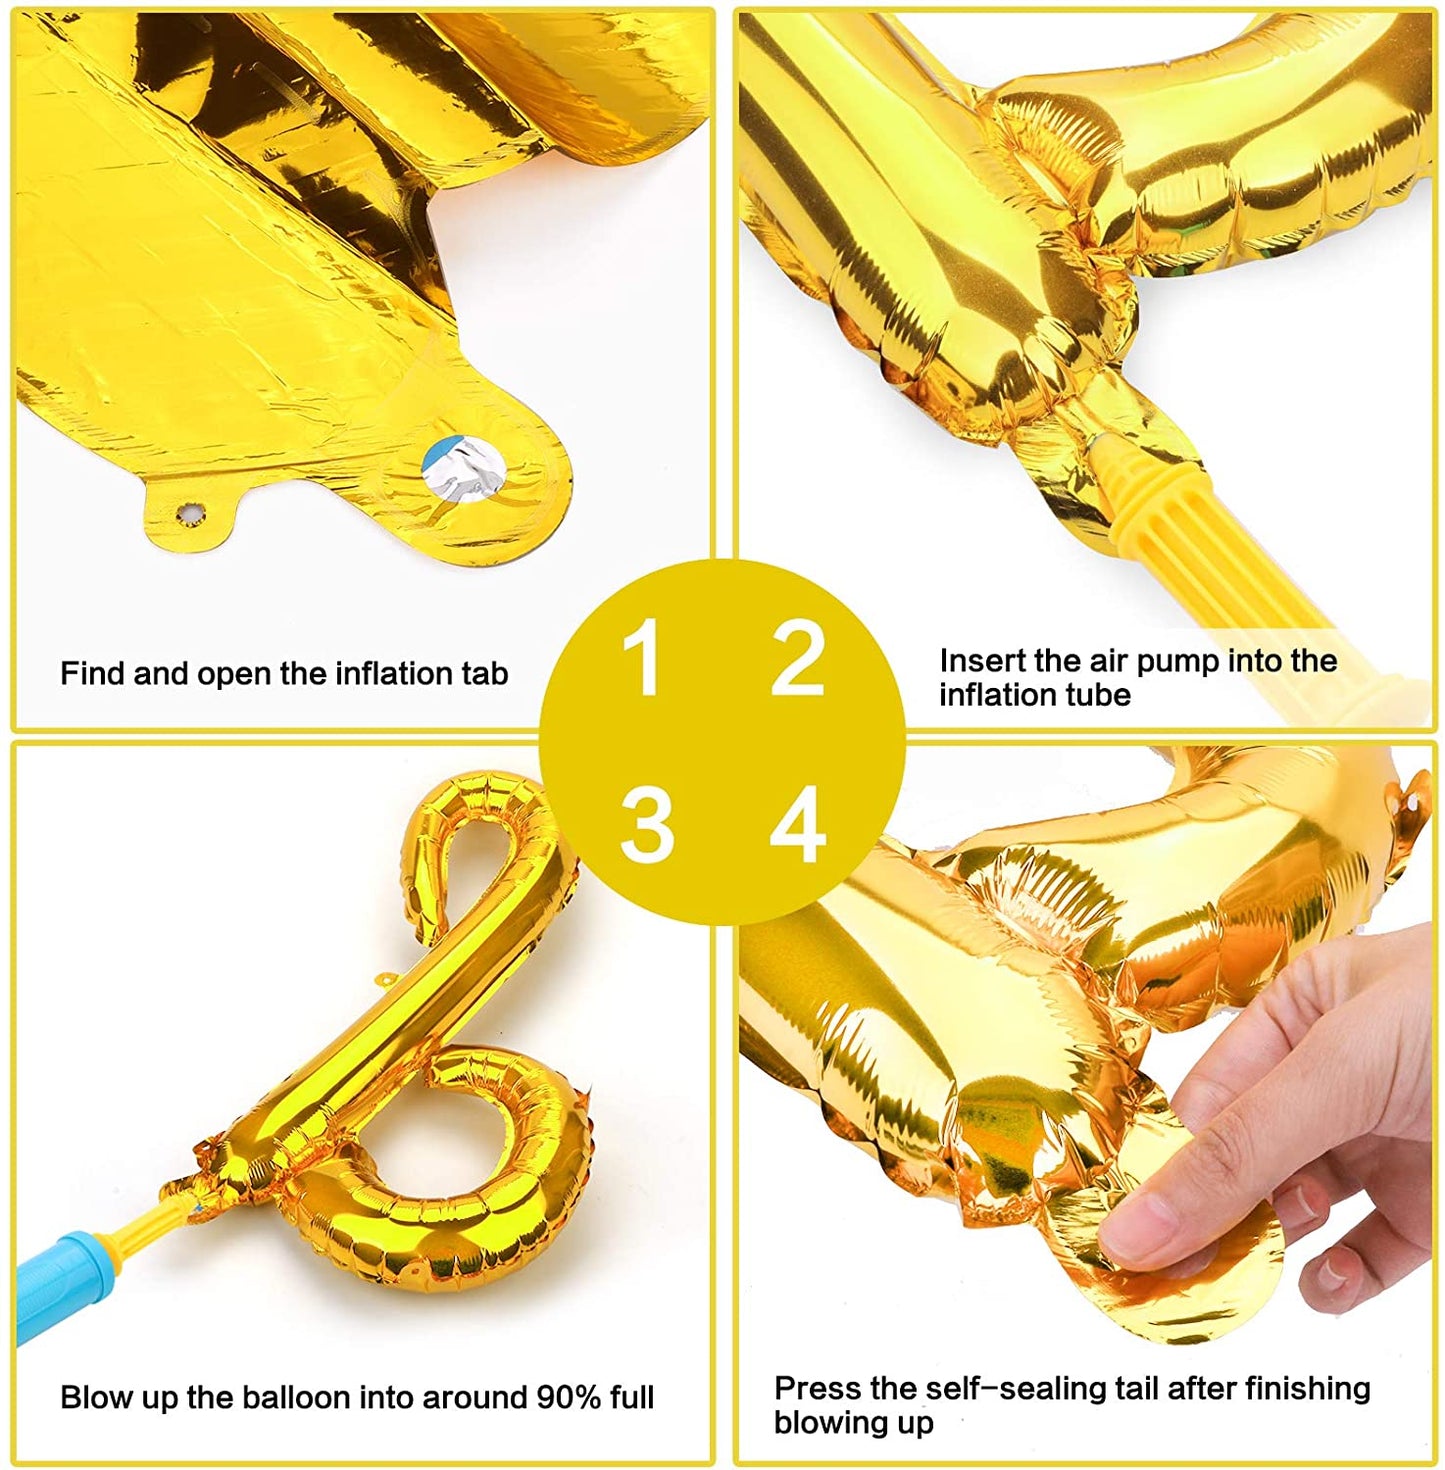 Alphabet Q Gold Foil Balloon 16 Inches